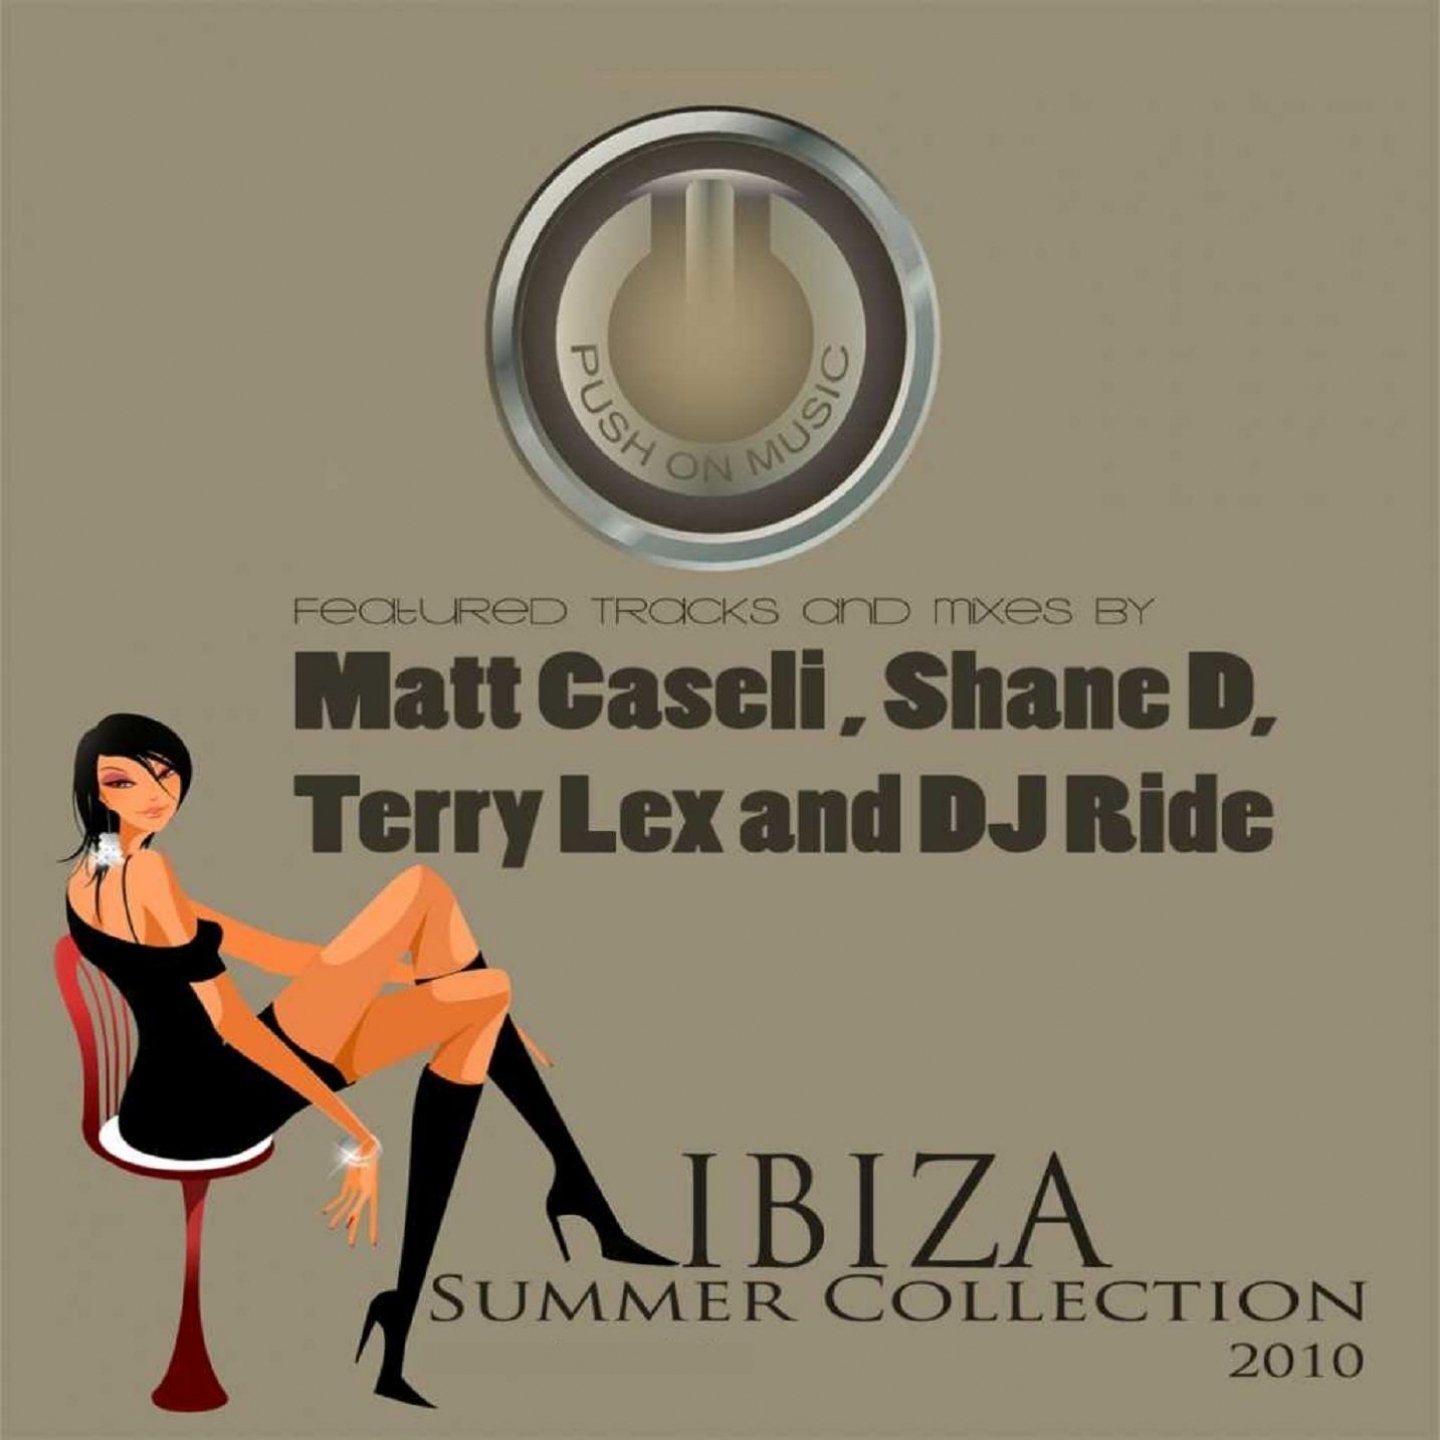 Ibiza Summer Collection 2010 (Tracks and Mixes by Matt Caseli, Shane D, Ter...